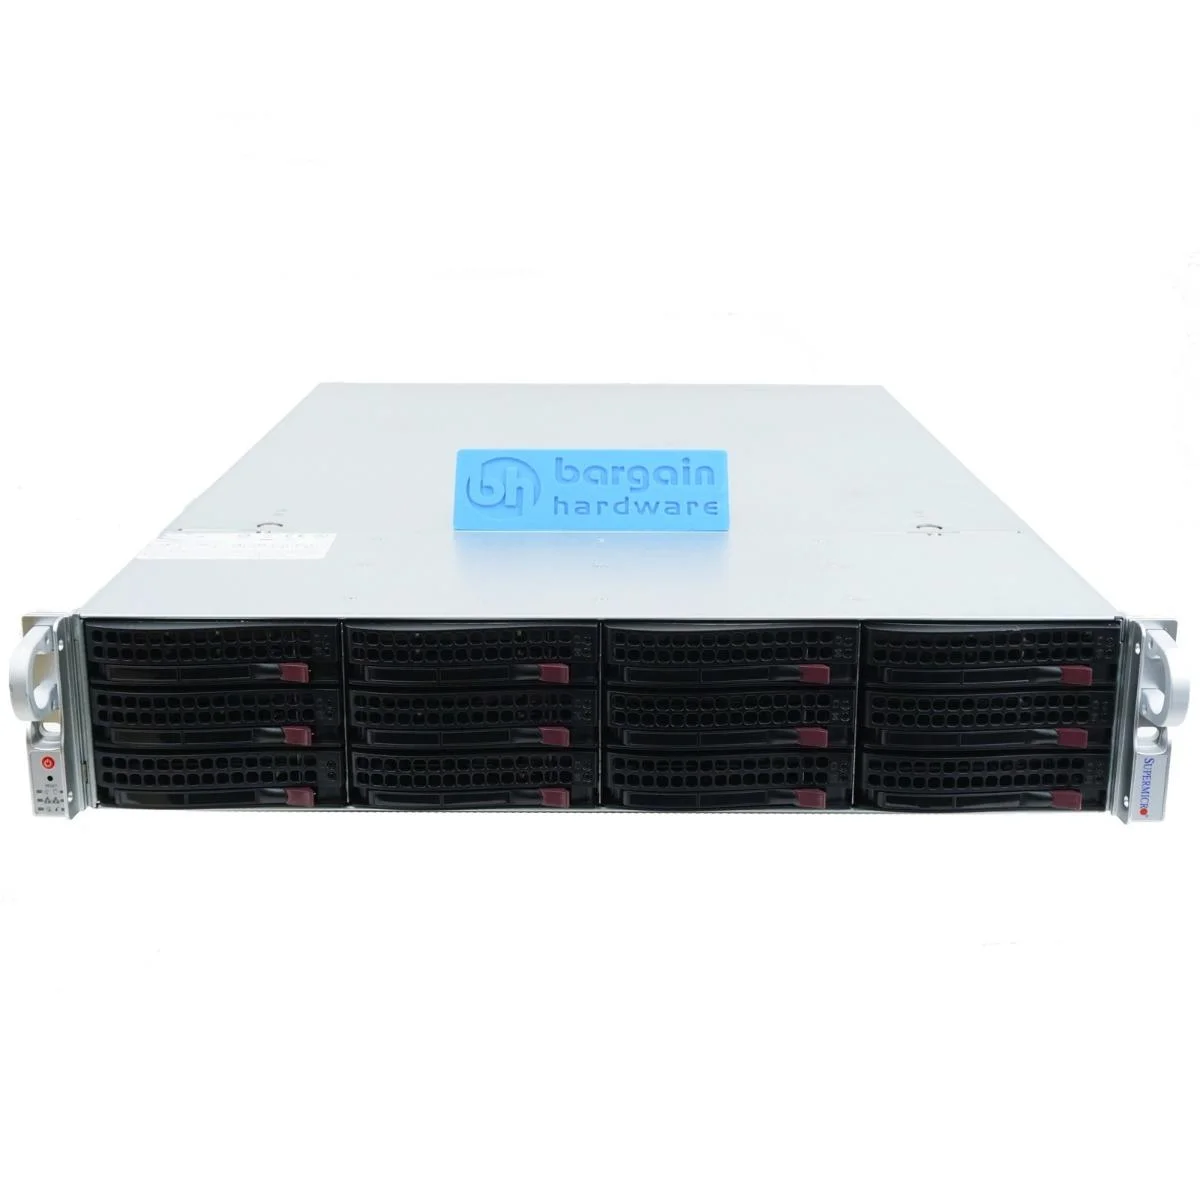 SuperMicro CSE-826 X10DRH-C 2U Rack Server